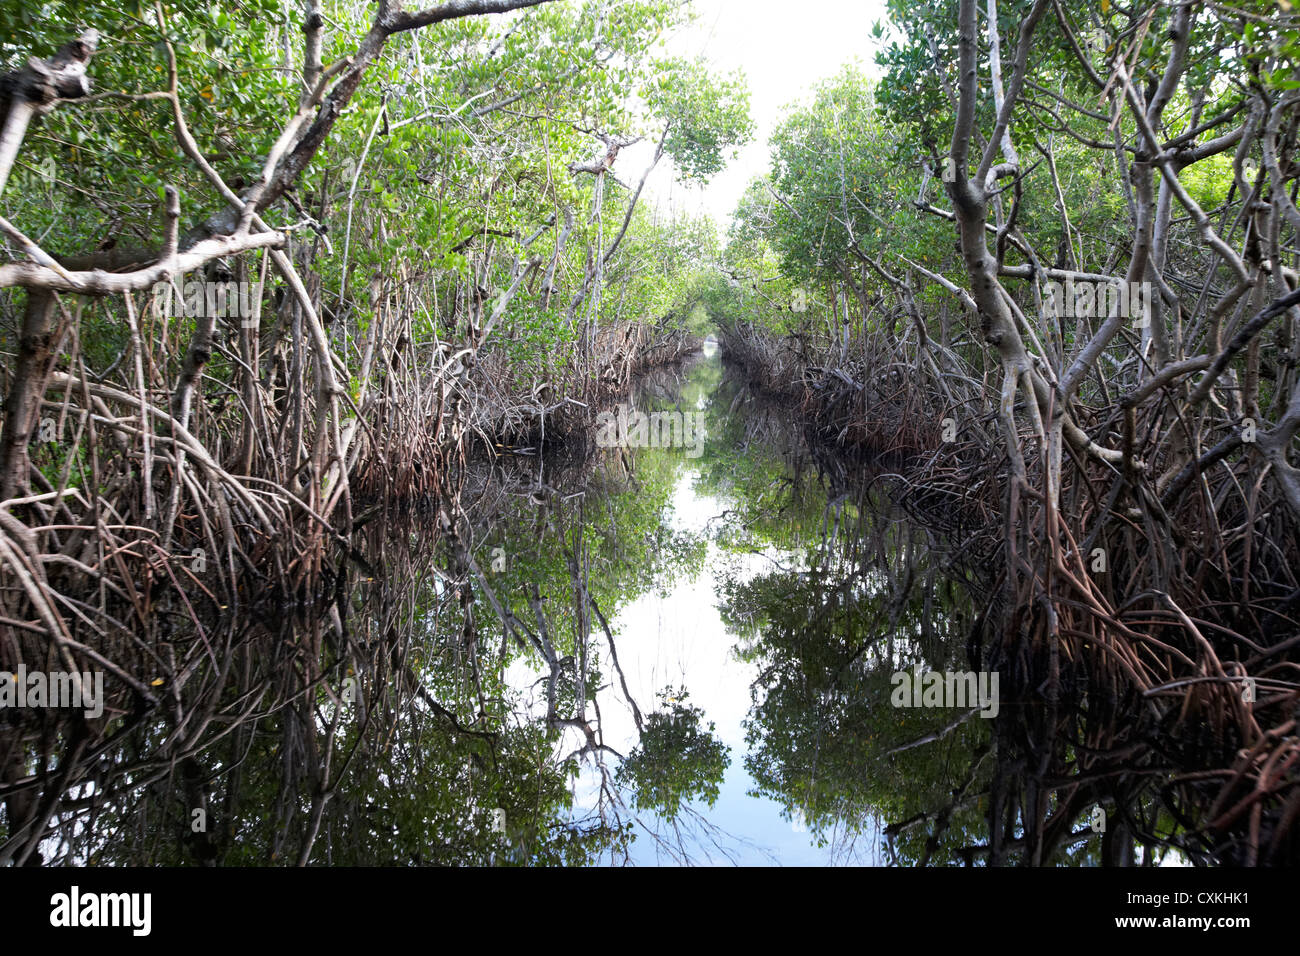 foret-de-mangroves-dans-les-everglades-de-floride-usa-cxkhk1.jpg